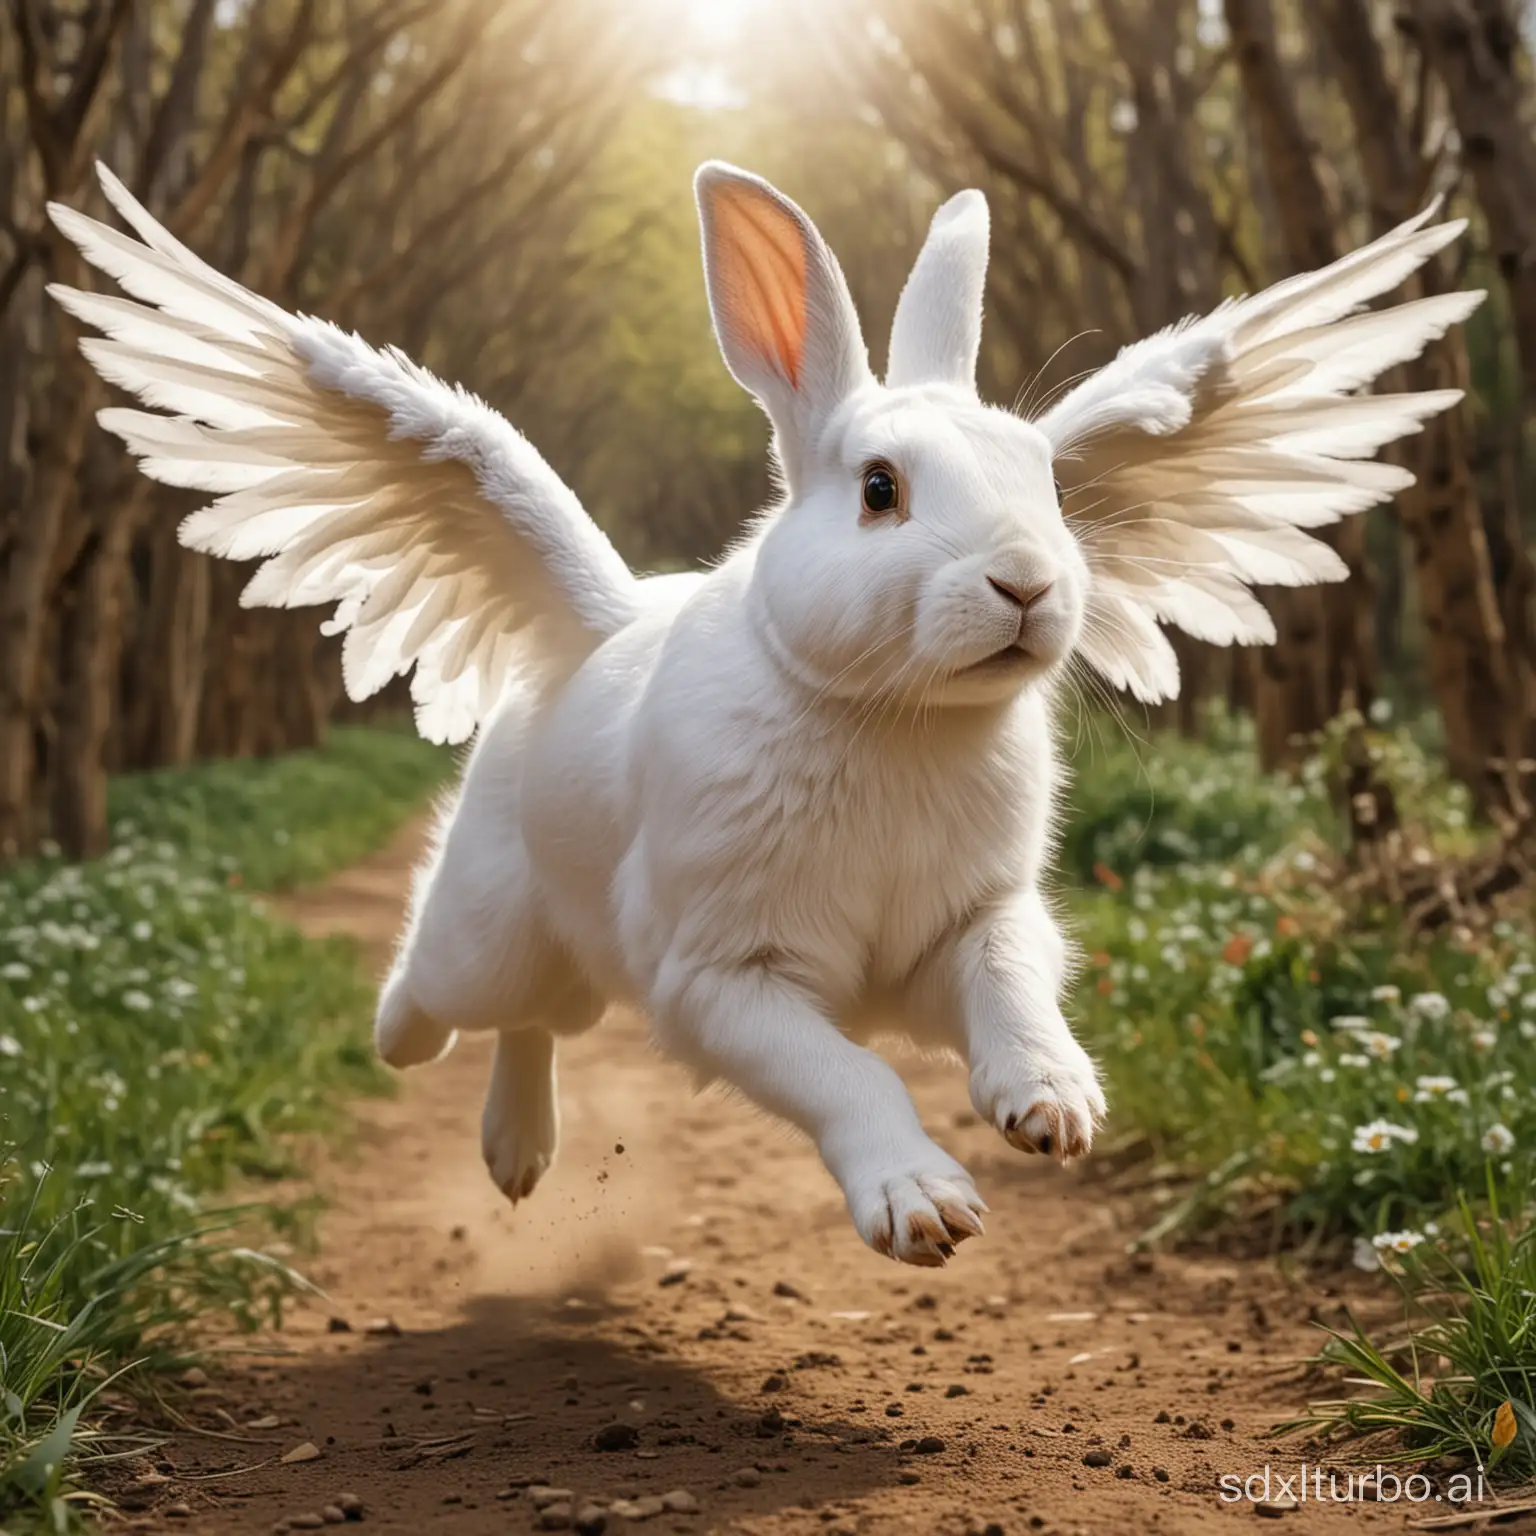 Energetic-Rabbit-Soaring-with-Wings-in-Full-Flight